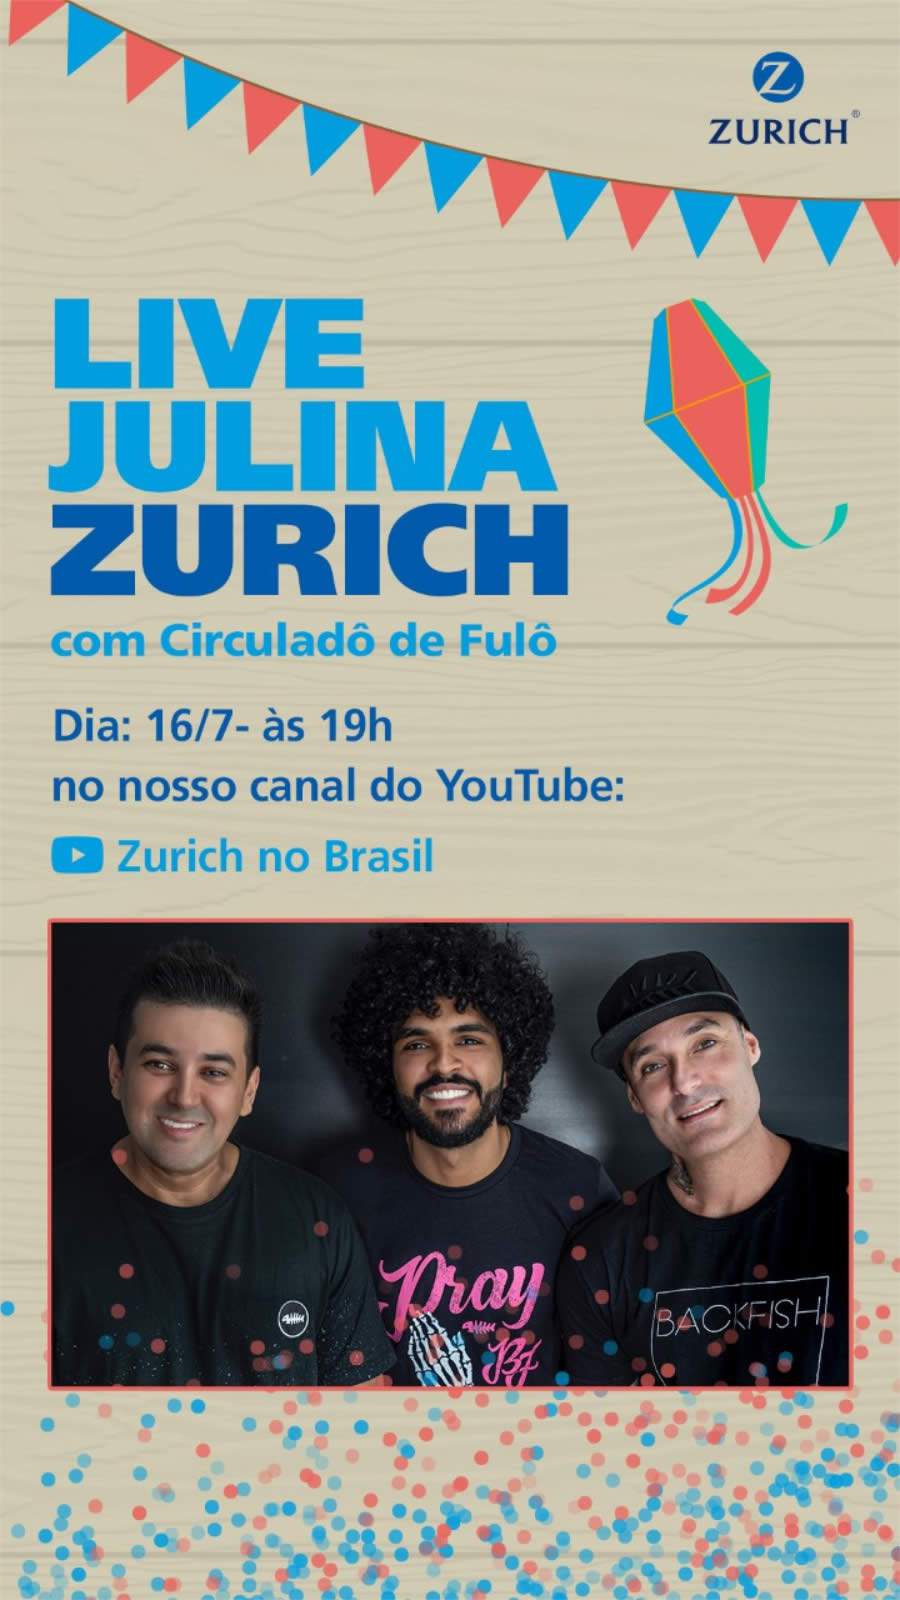 Zurich realiza Live de Festa Julina com Circuladô de Fulô, nesta quinta-feira, às 19h